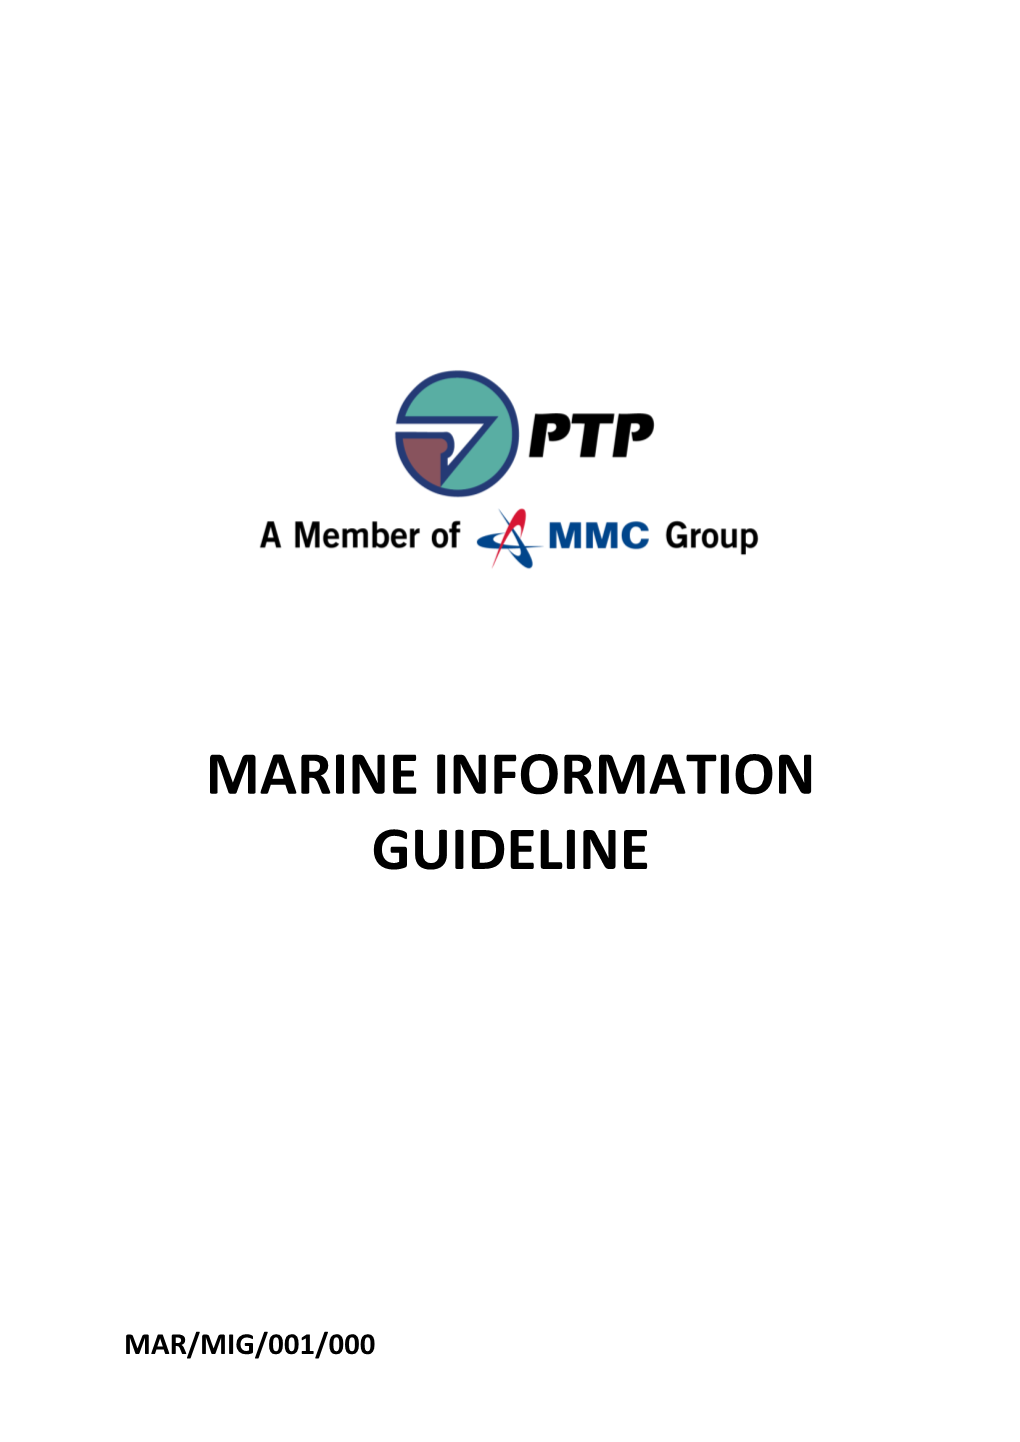 Pelabuhan Tanjung Pelepas Marine Information Guideline